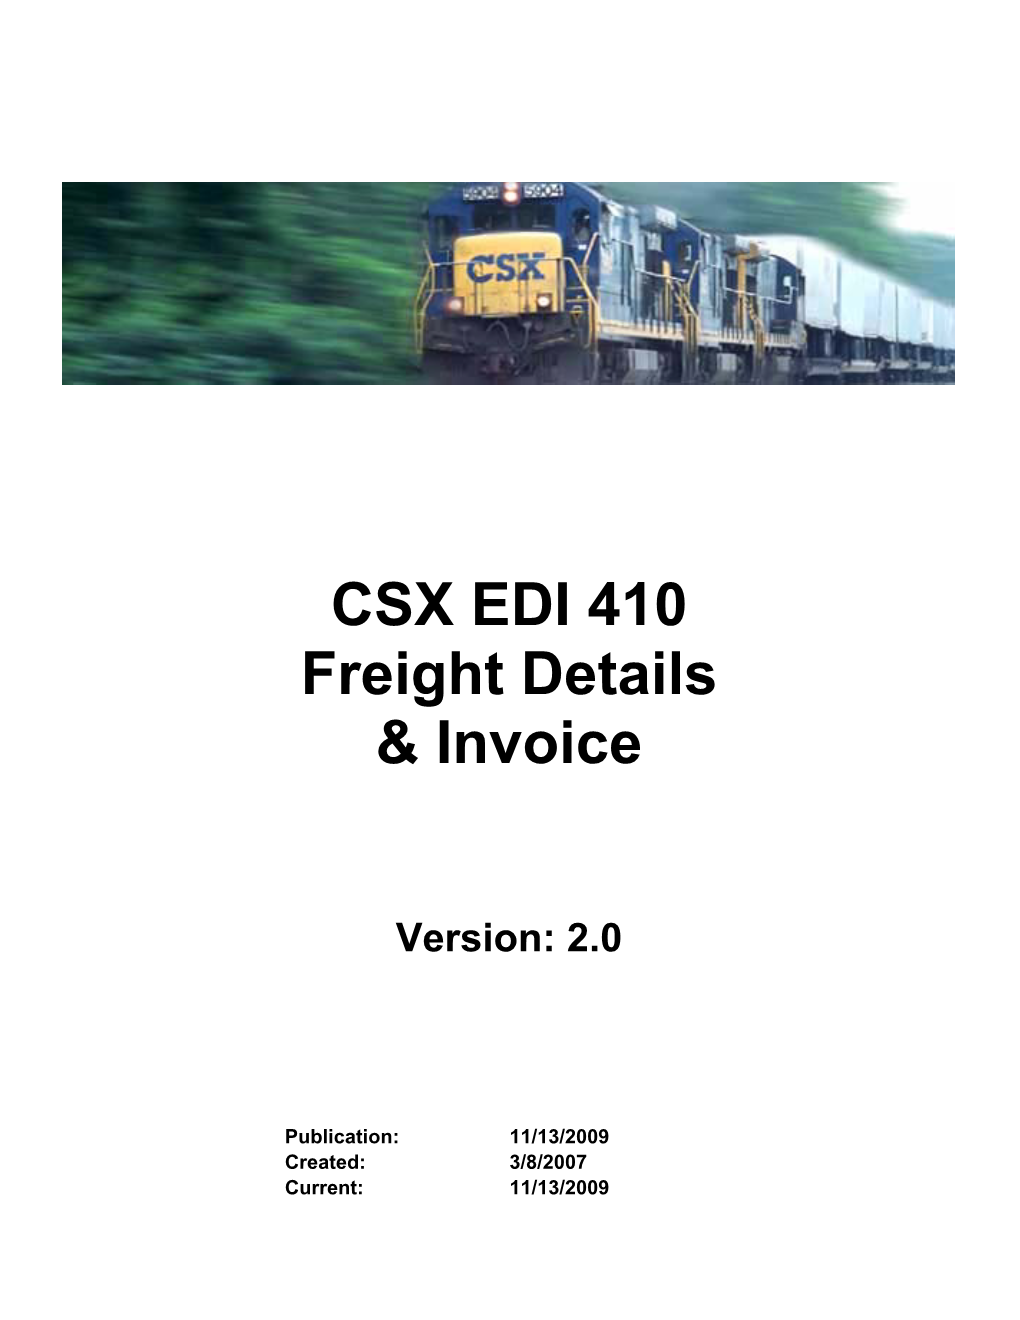 CSX EDI 410 Freight Details & Invoice